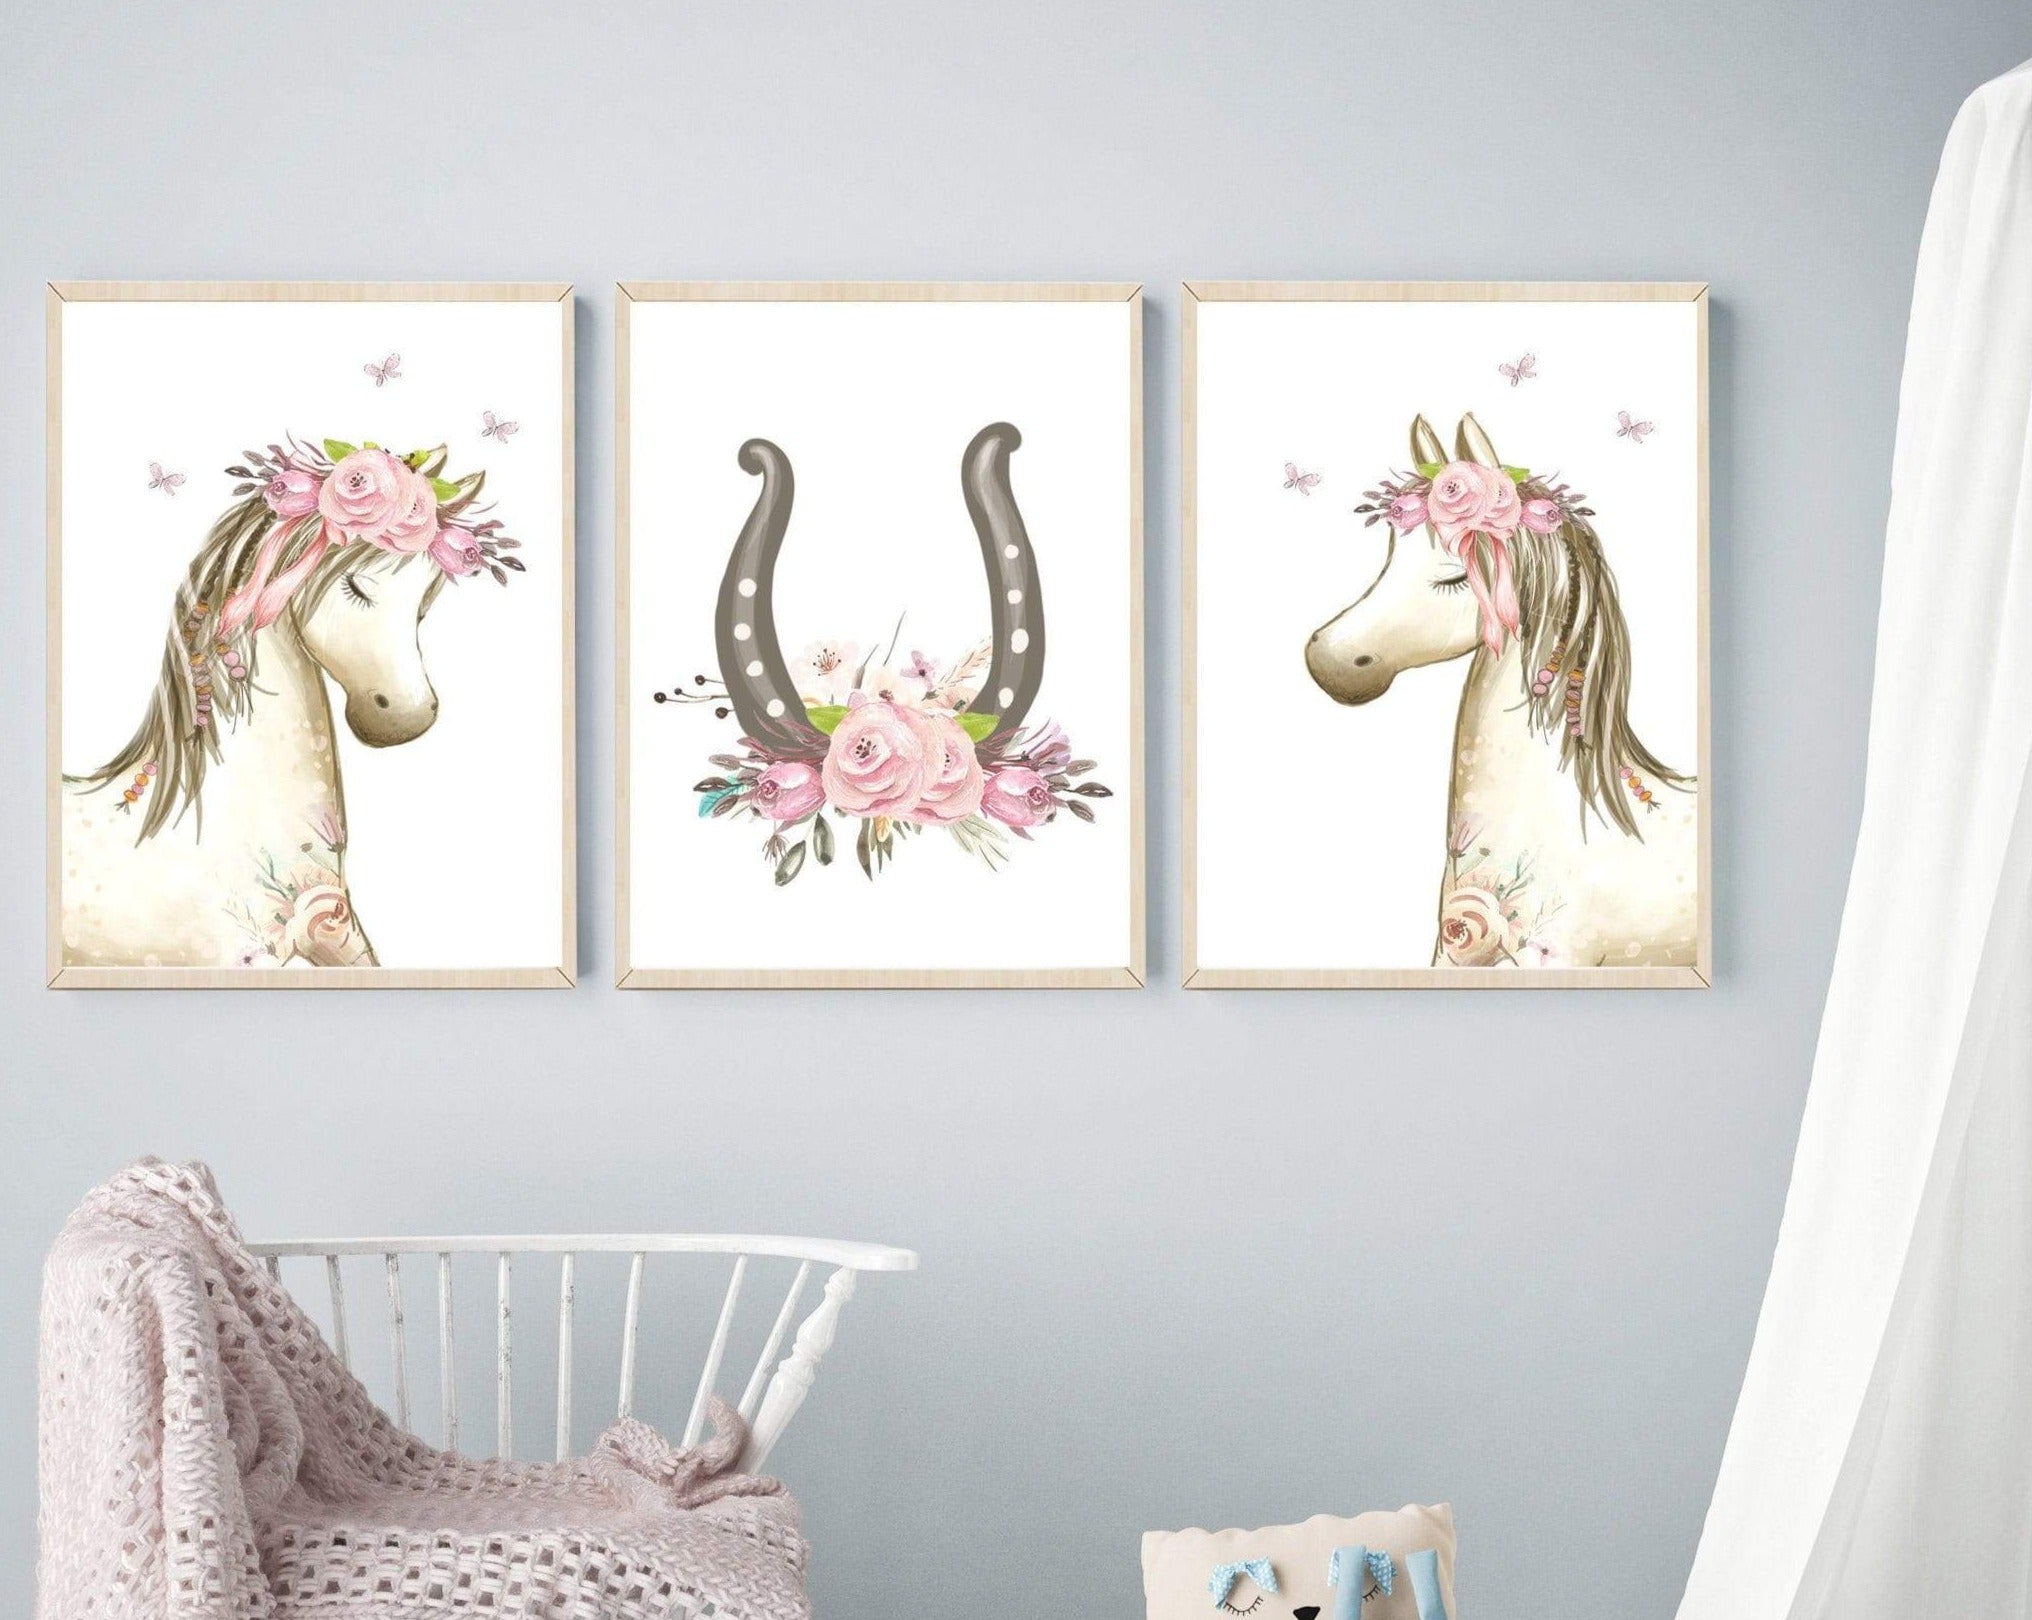 Horse nursery decor - Girls horse art prints - Horse nursery print - Pony wall art - Floral horse prints - Watercolor horse print - H2234 nursery art print baby nursery bedroom decor